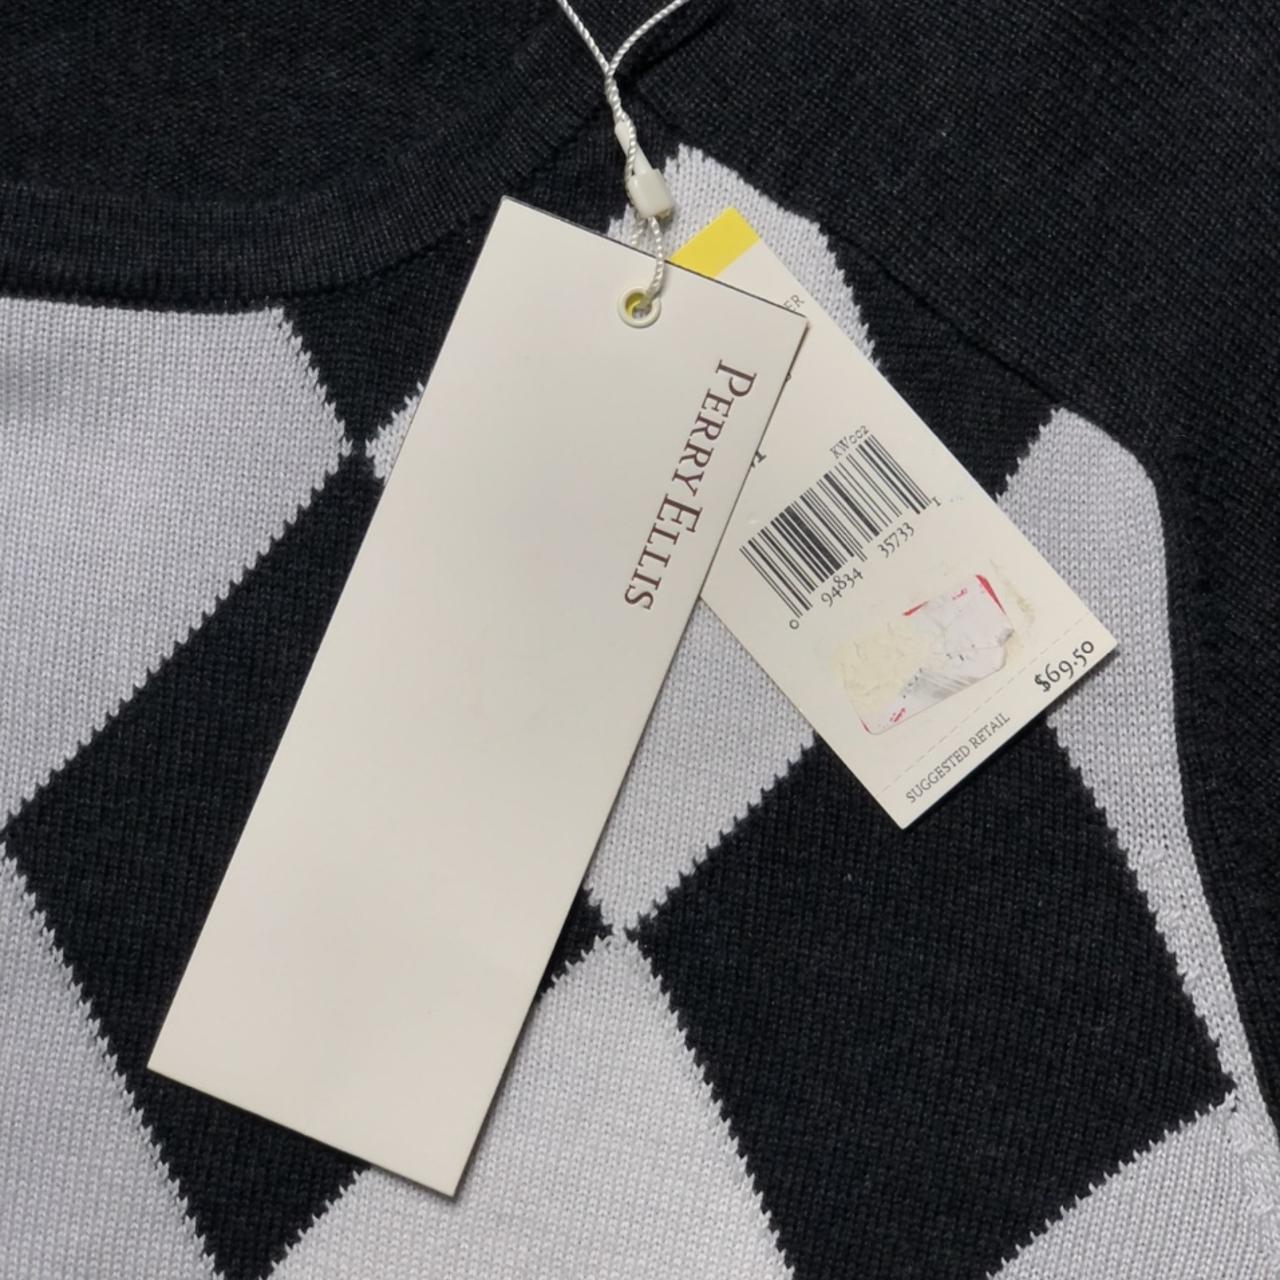 Product Image 3 - Perry Ellis Argyle Sweater

Brand new